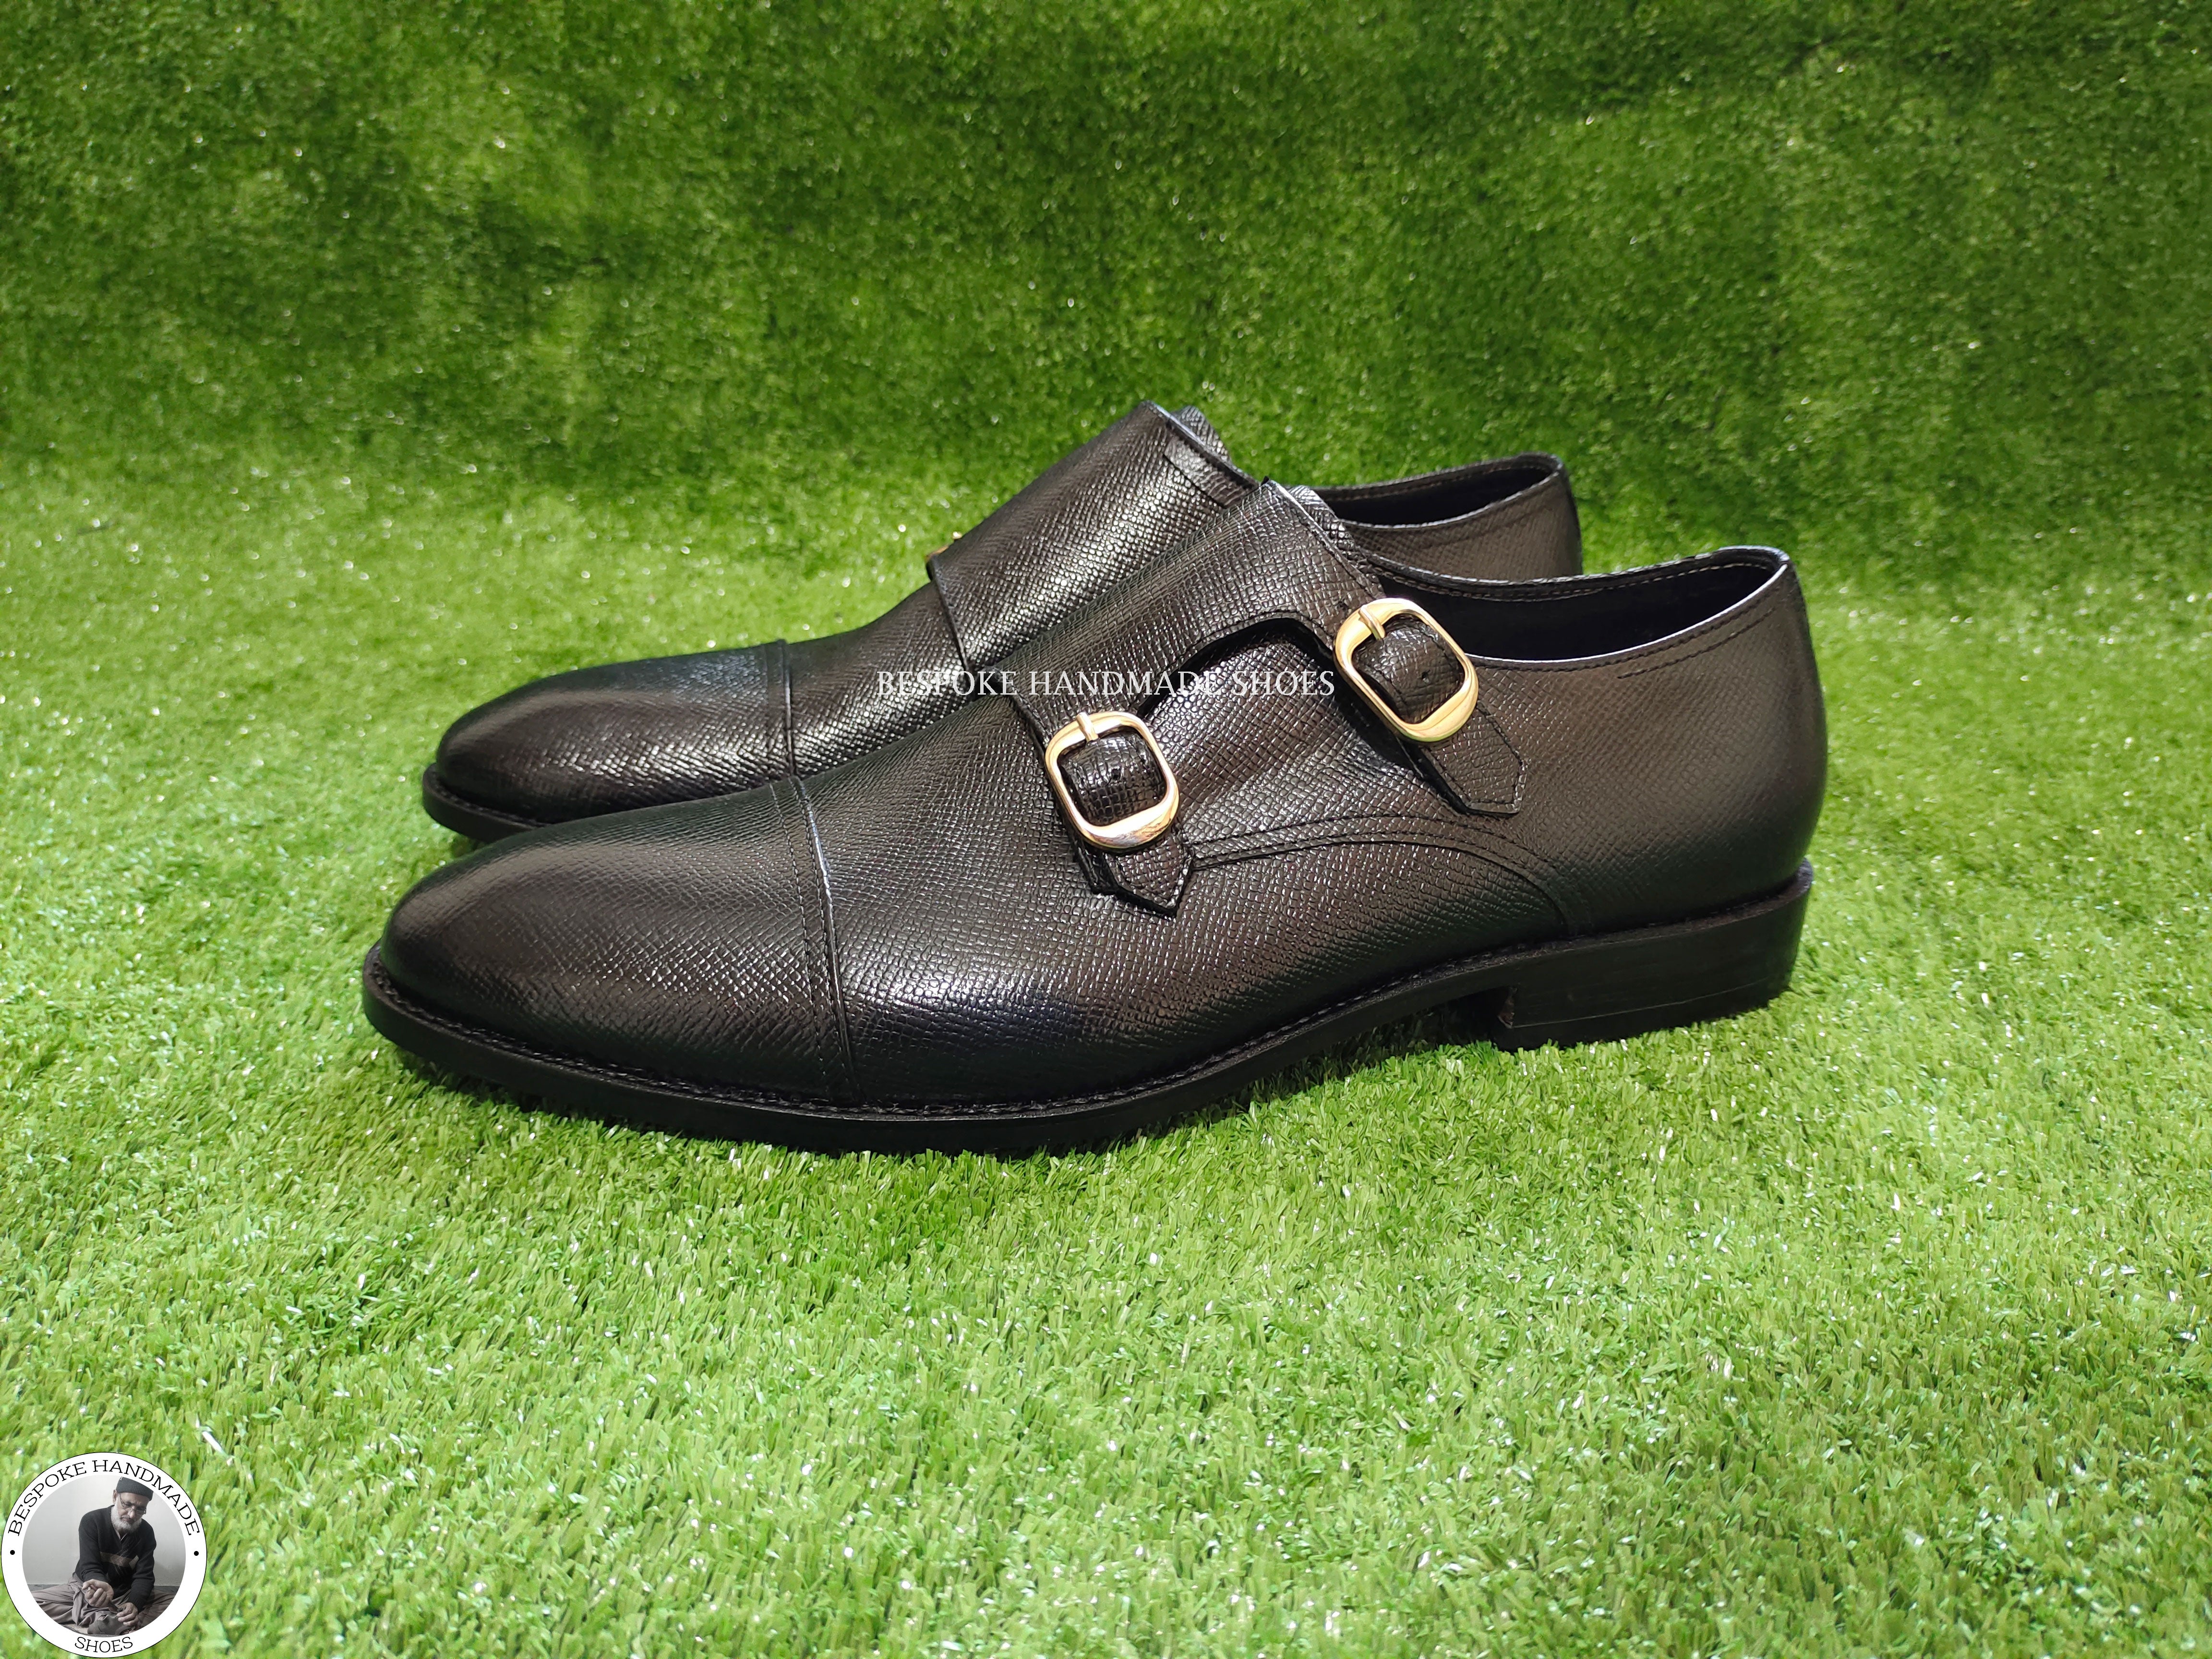 Bespoke Handmade Men's Black Leather Double Monk Strap Loafer Cap Toe Fashion Shoes